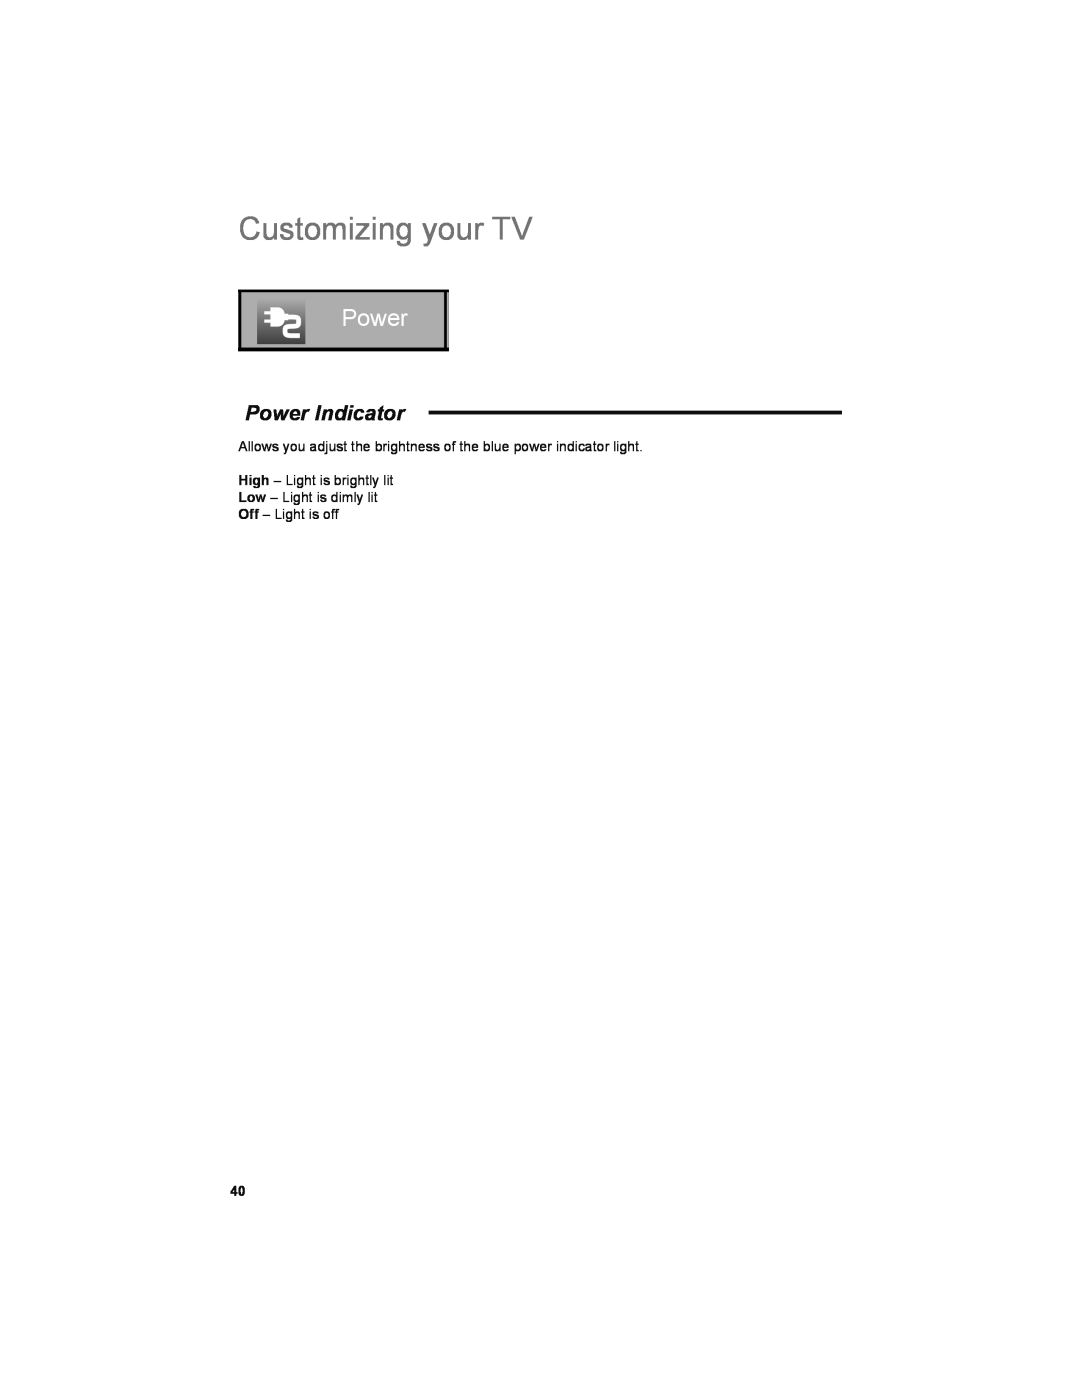 JVC LT-32JM30 manual Power Indicator, Customizing your TV 